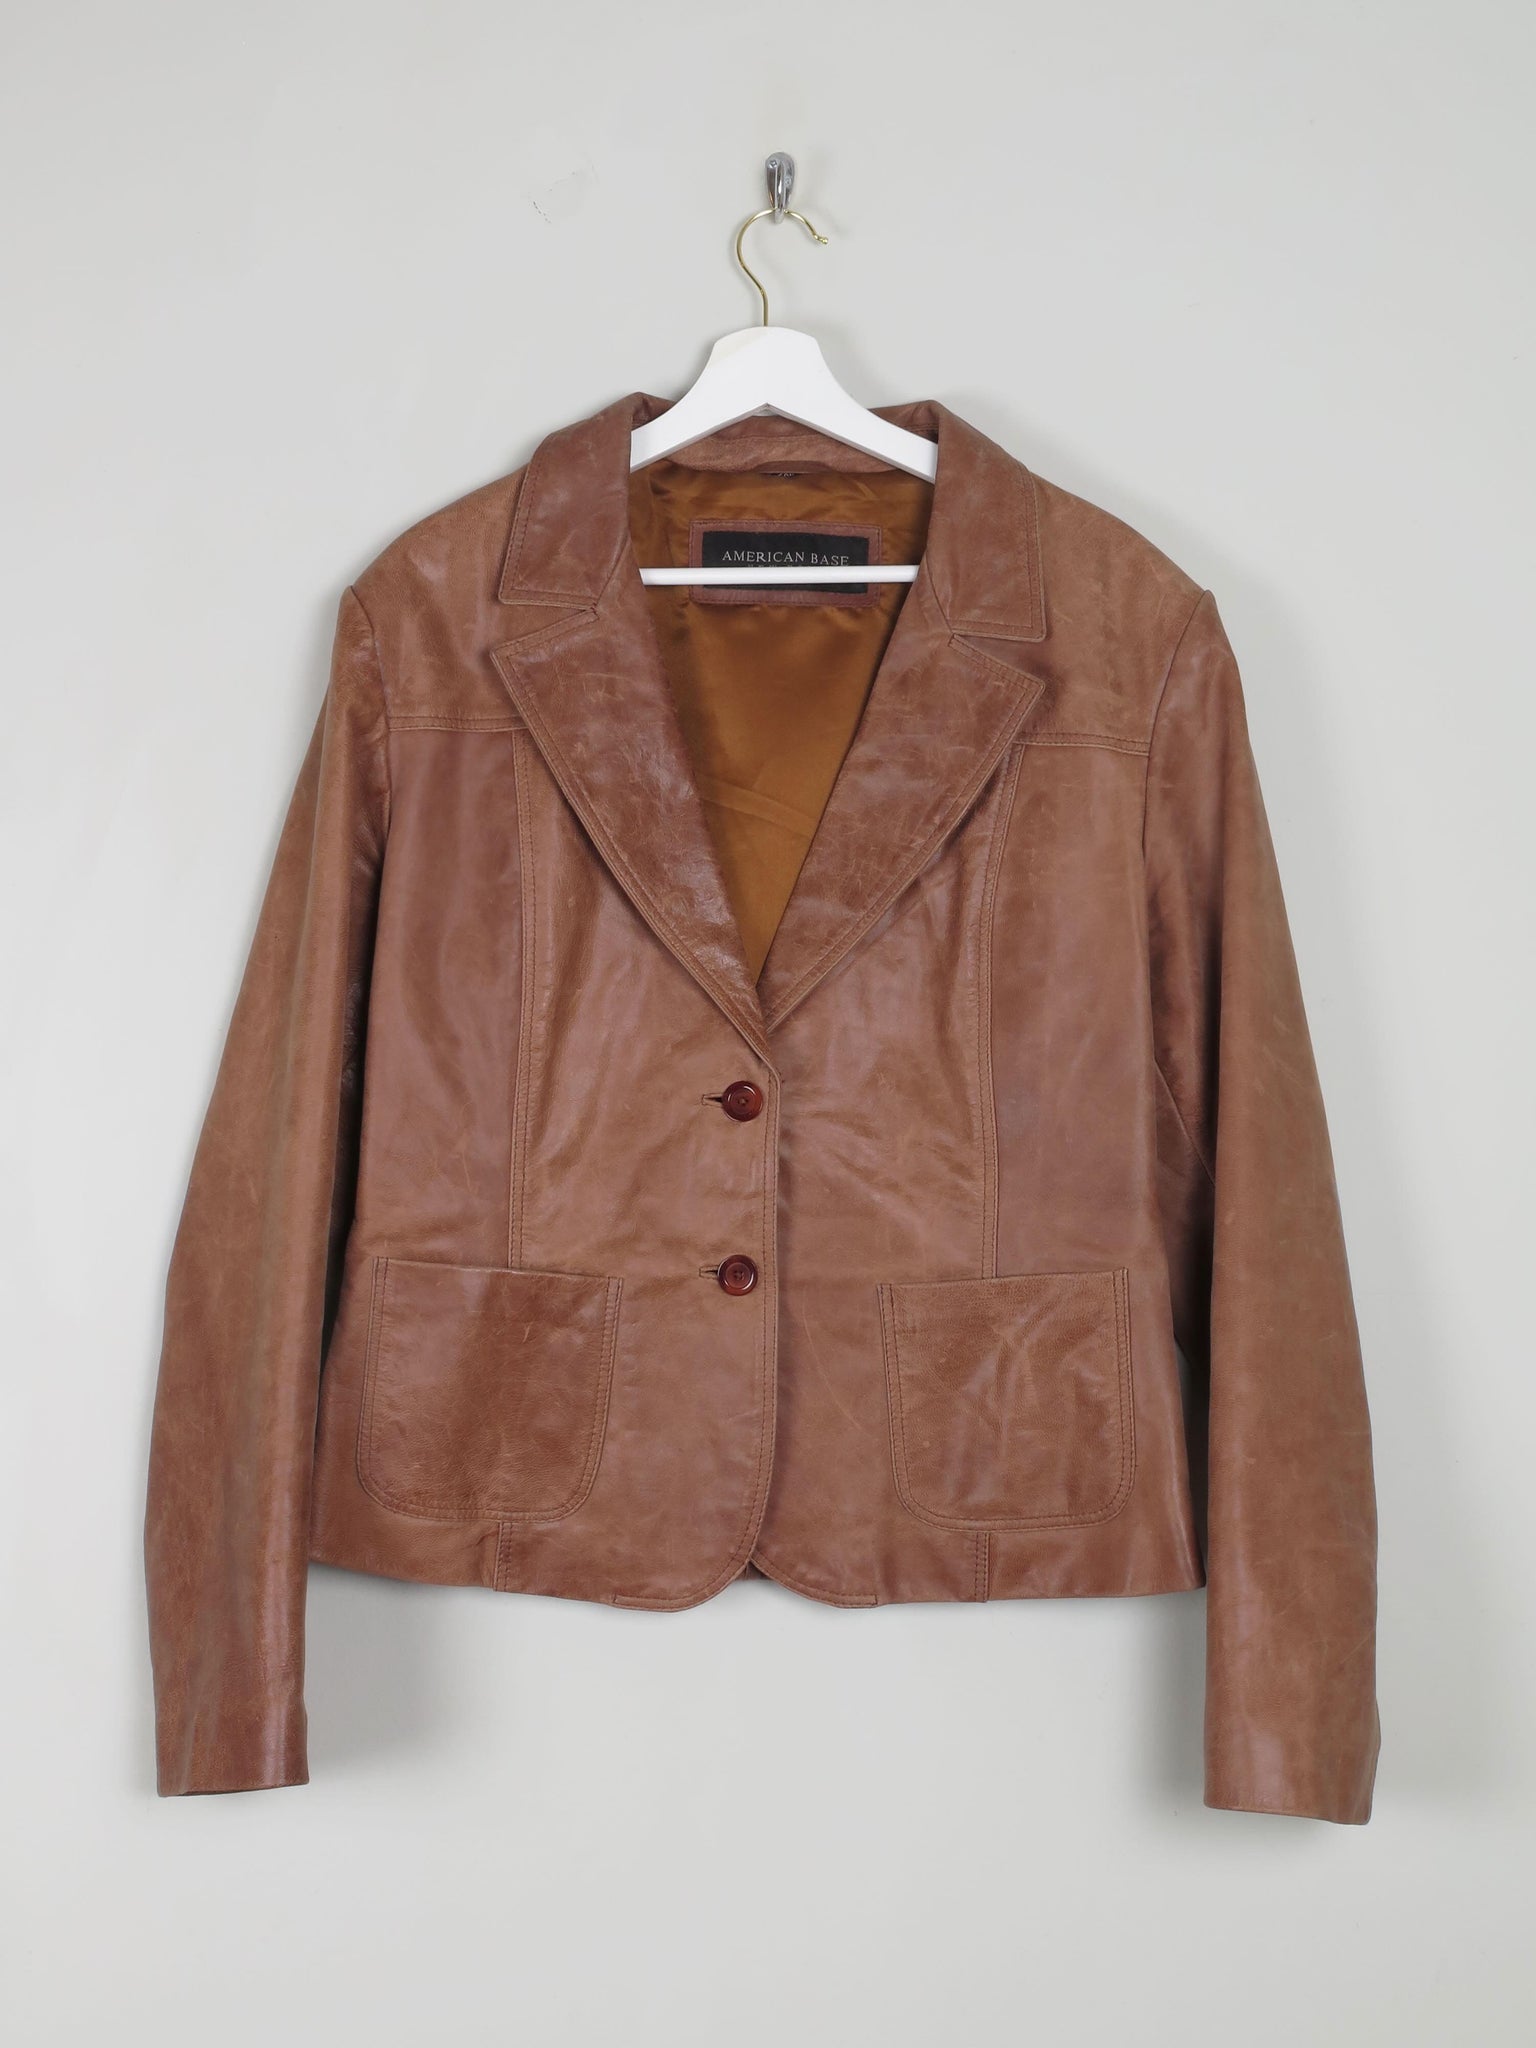 Women's Tan/Brown Vintage Leather Jacket L - The Harlequin